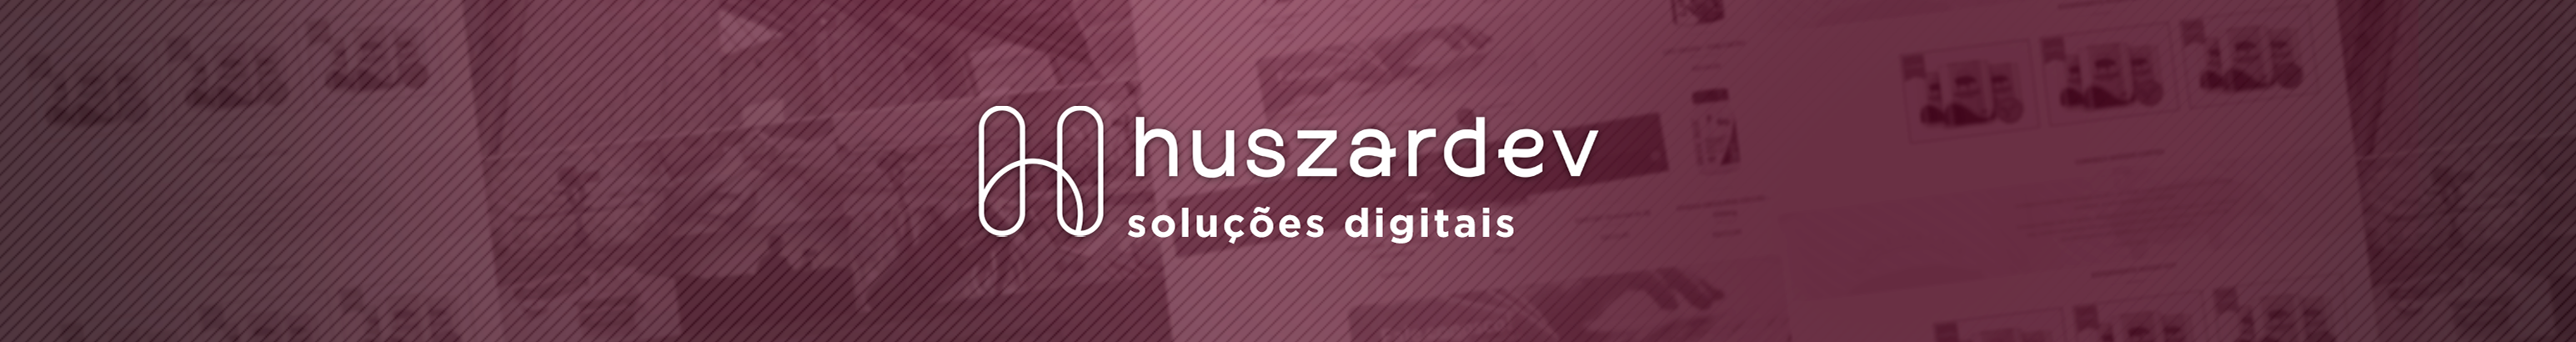 Profielbanner van Felipe Huszar